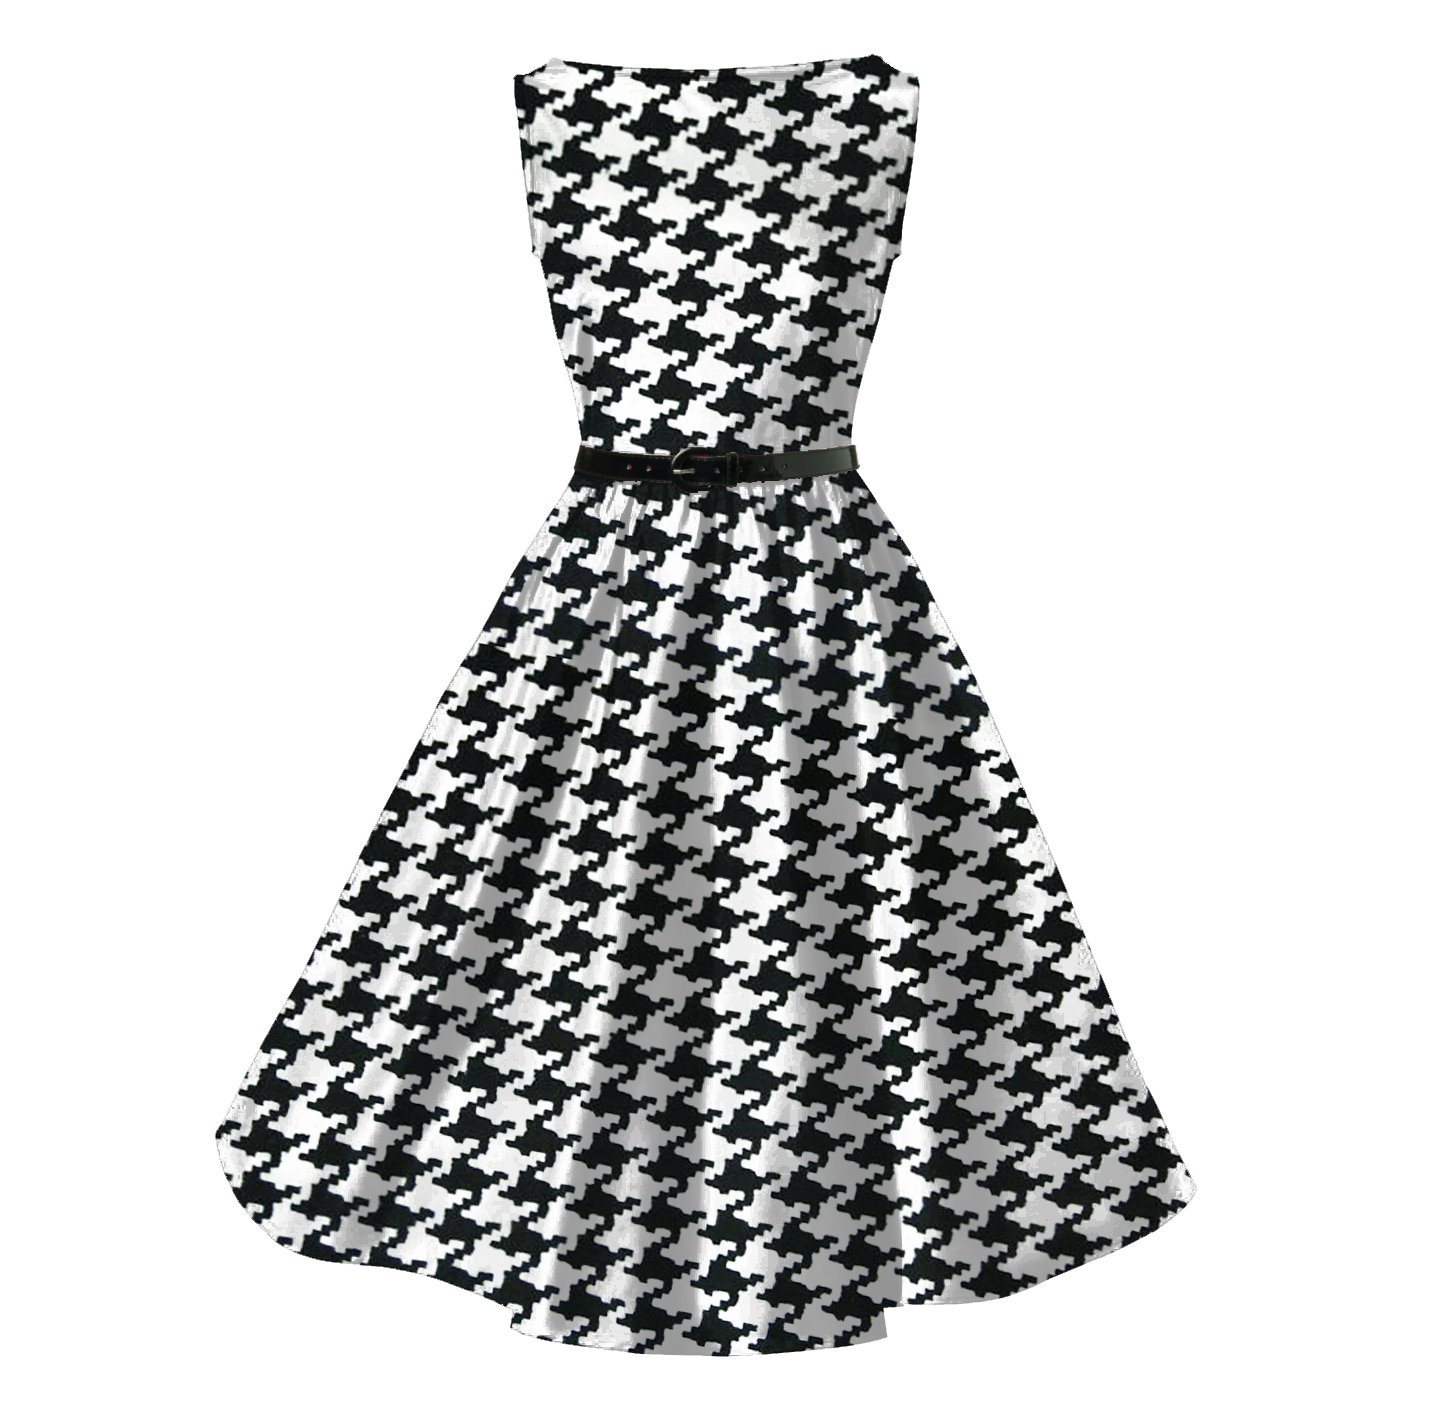 Rockabilly Houndstooth Printing Audrey Hepburn Plus Size Cotton Dress for Ladies